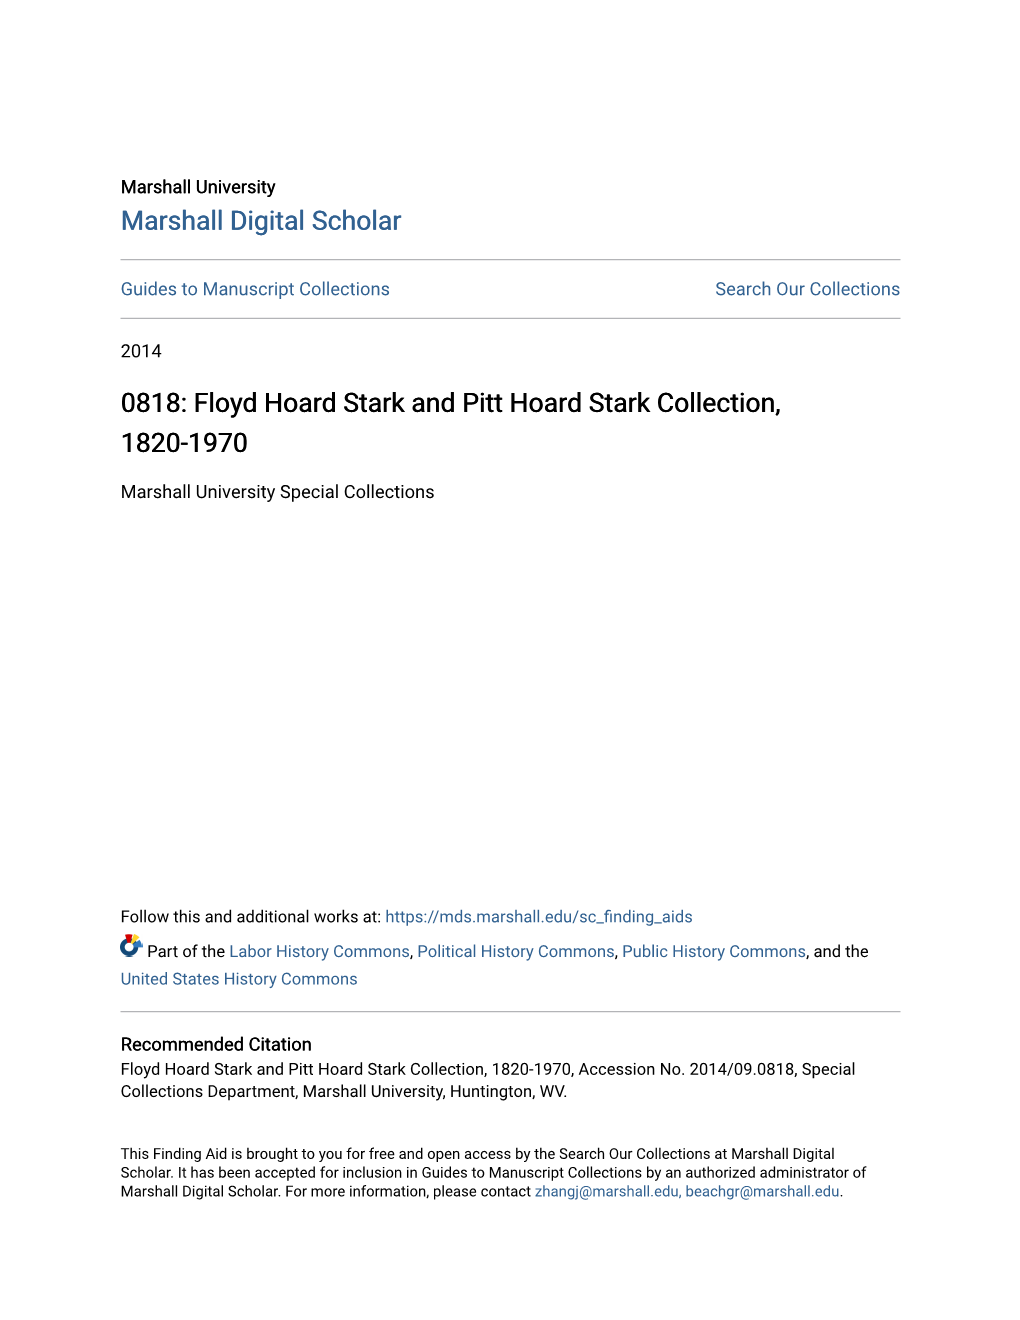 Floyd Hoard Stark and Pitt Hoard Stark Collection, 1820-1970